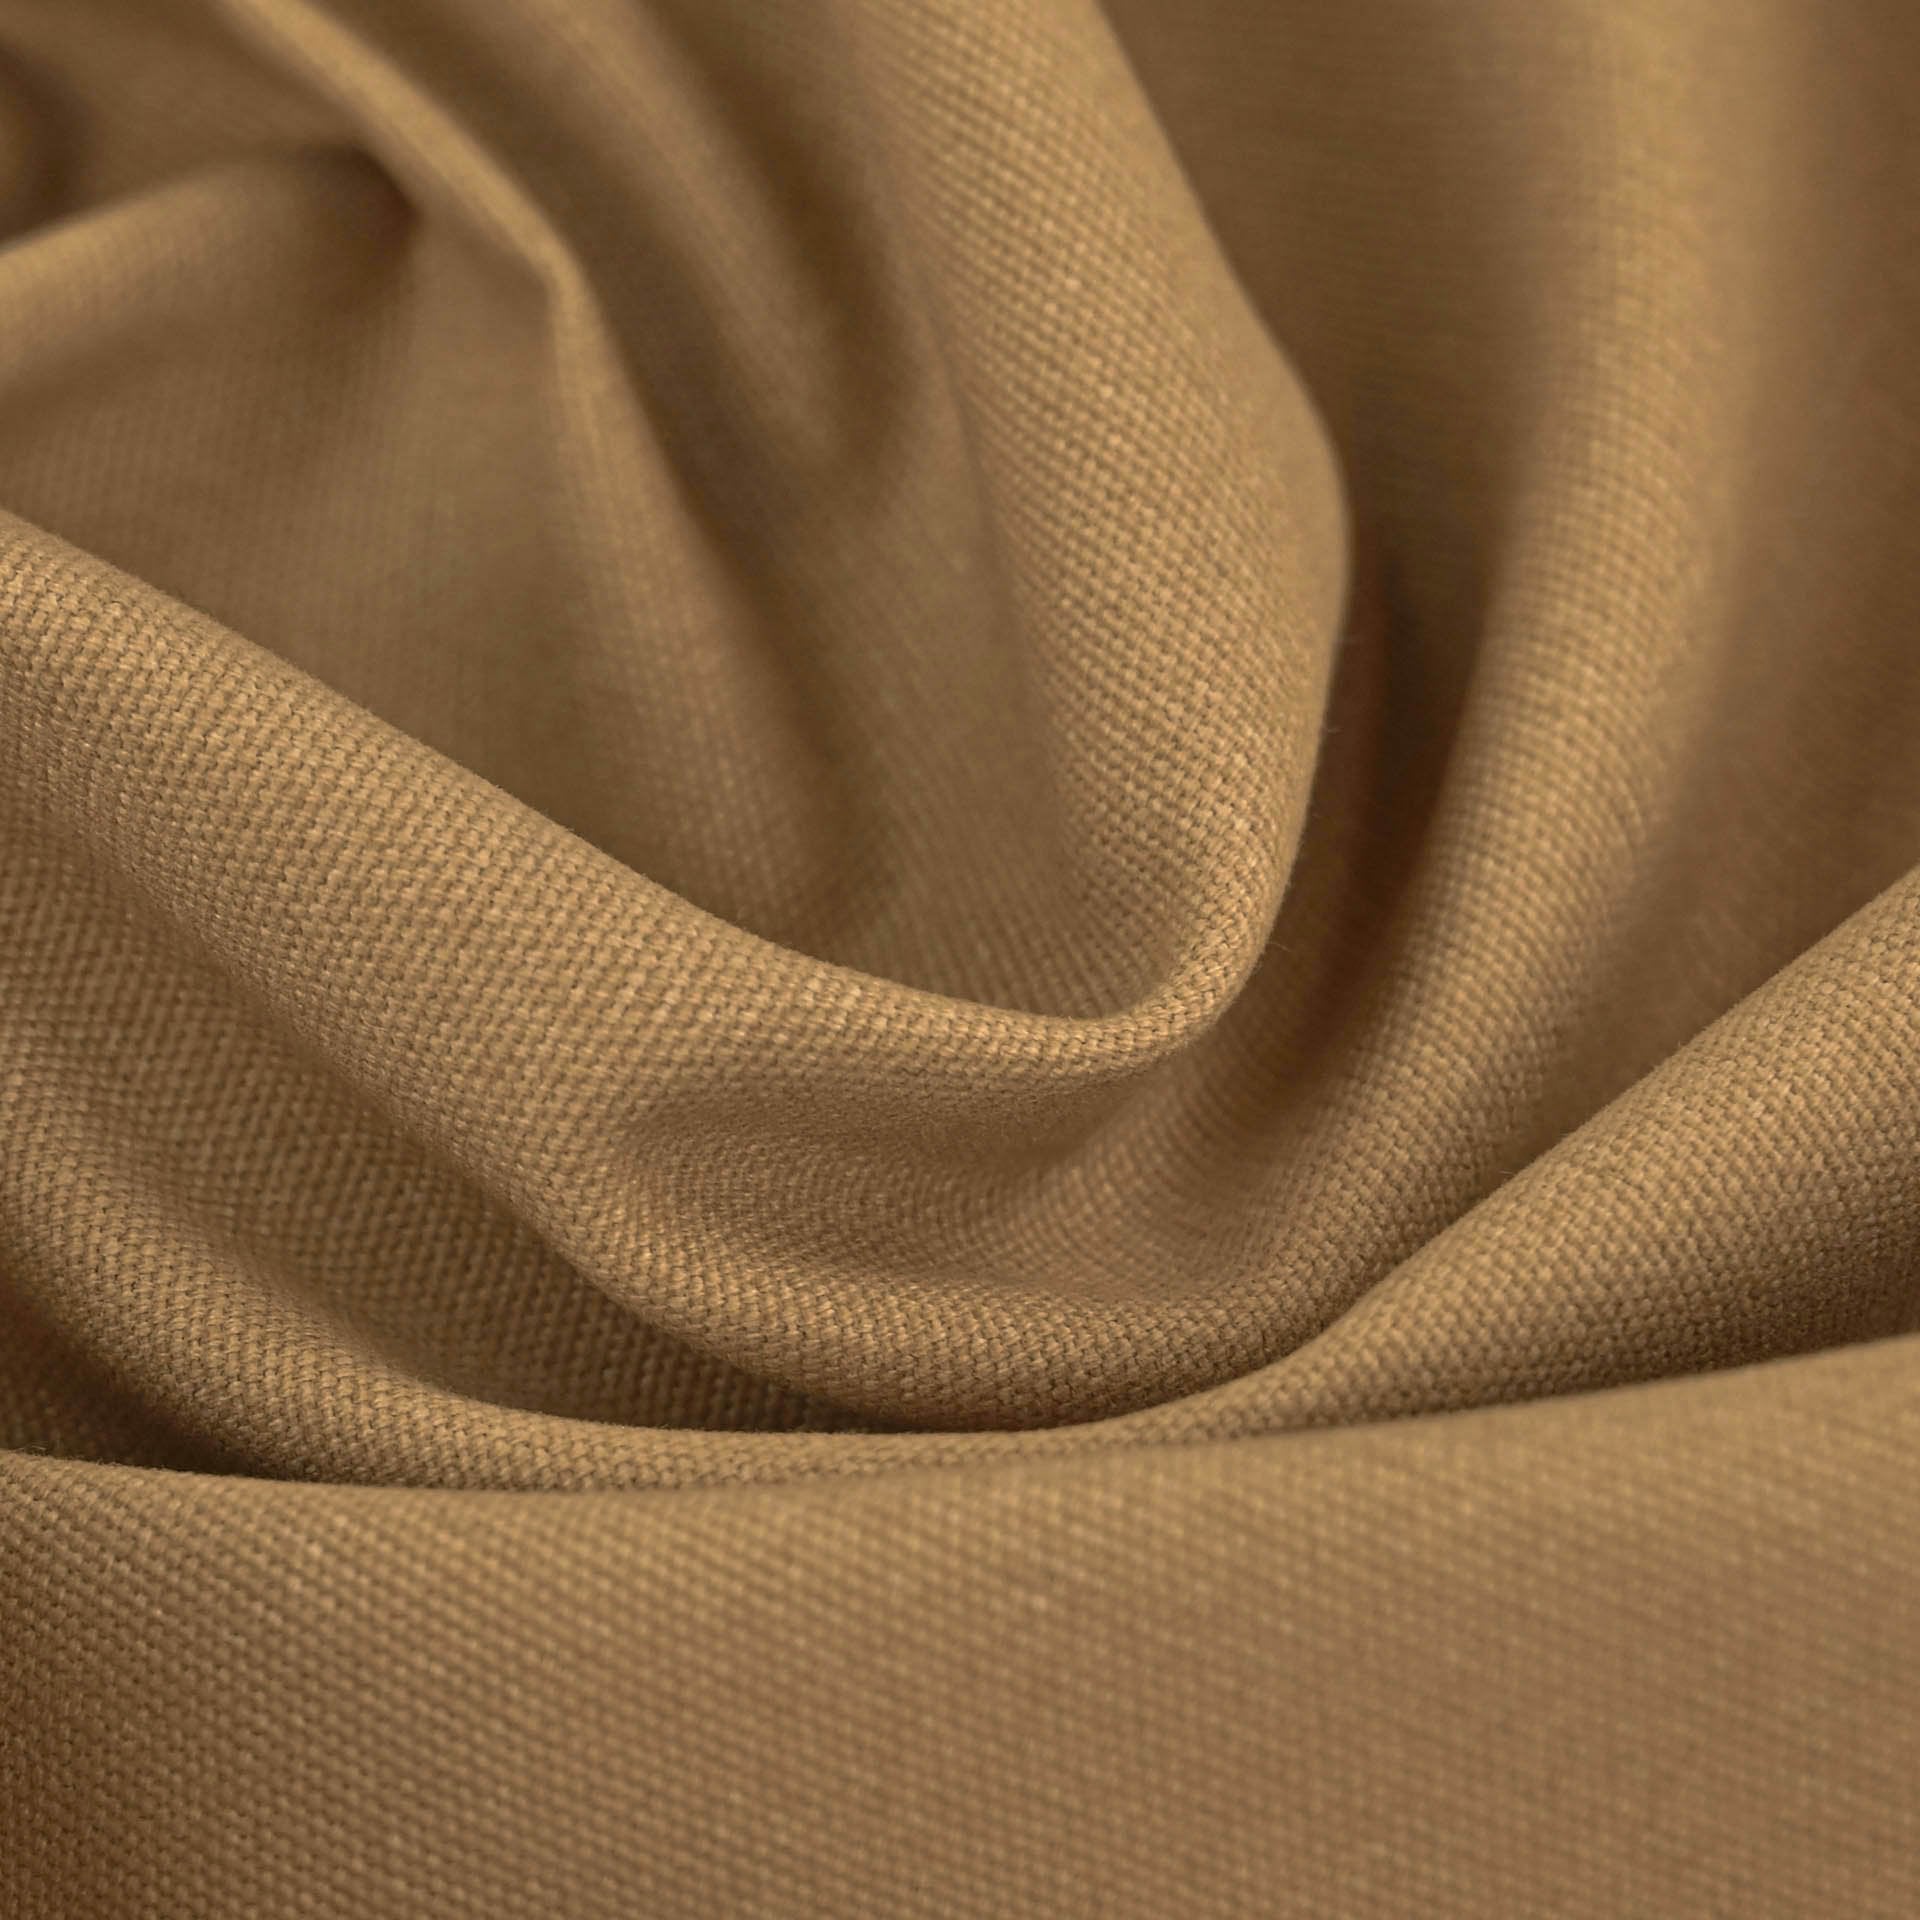 Camel Canvas Fabric 97854